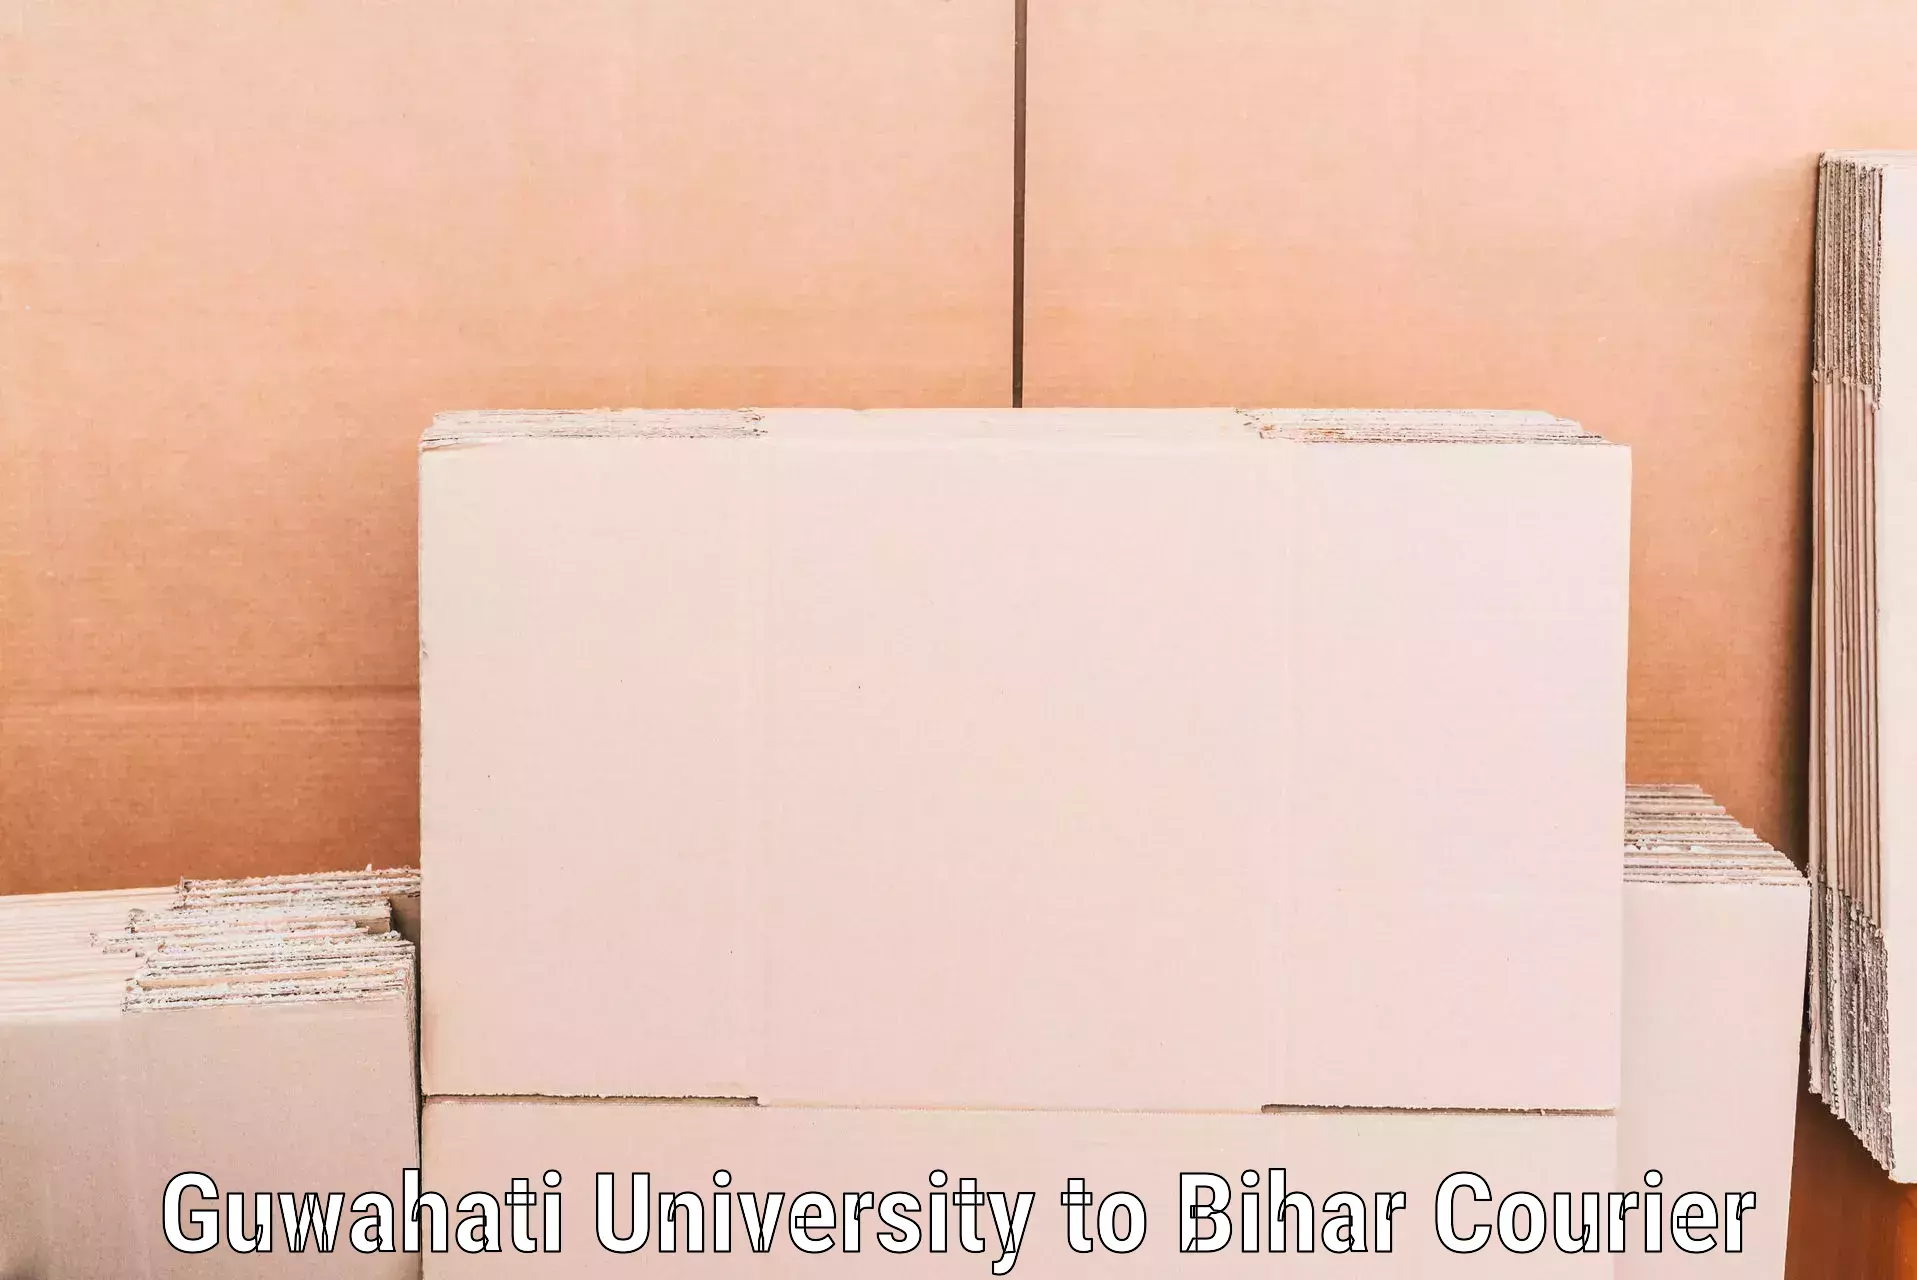 Furniture transport company Guwahati University to Dighwara